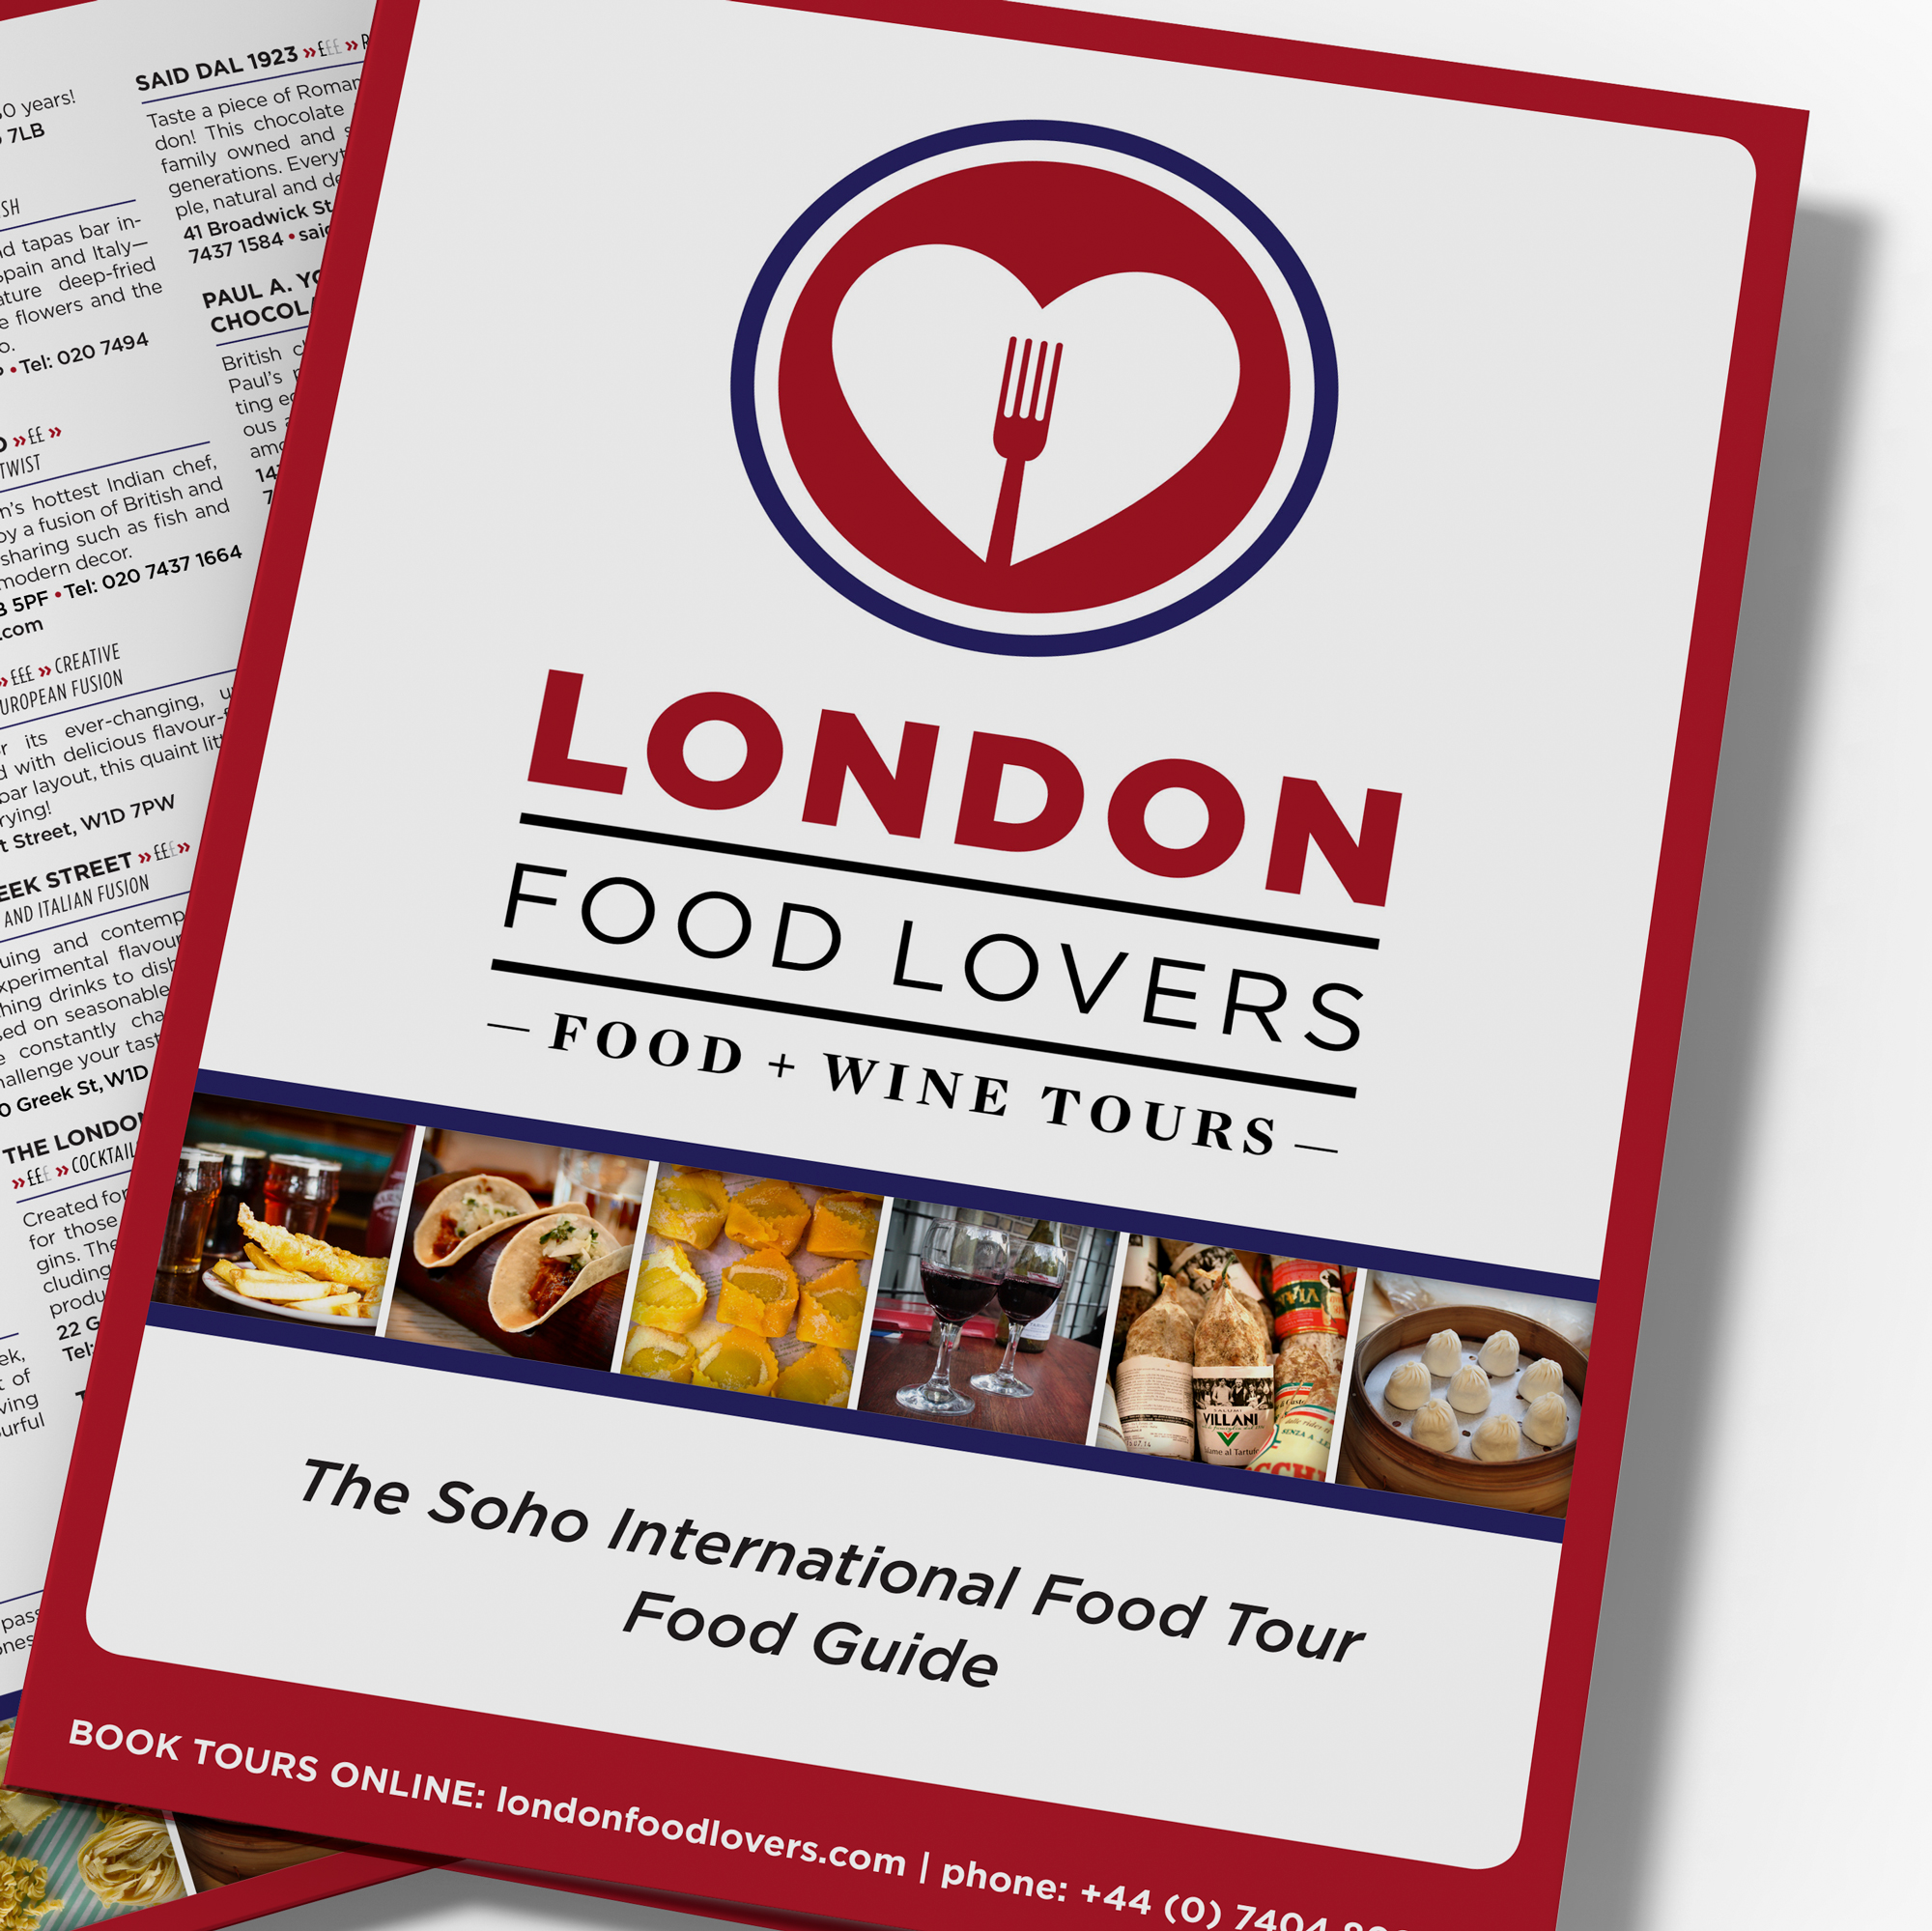 London Food Lovers Food + Wine Tours